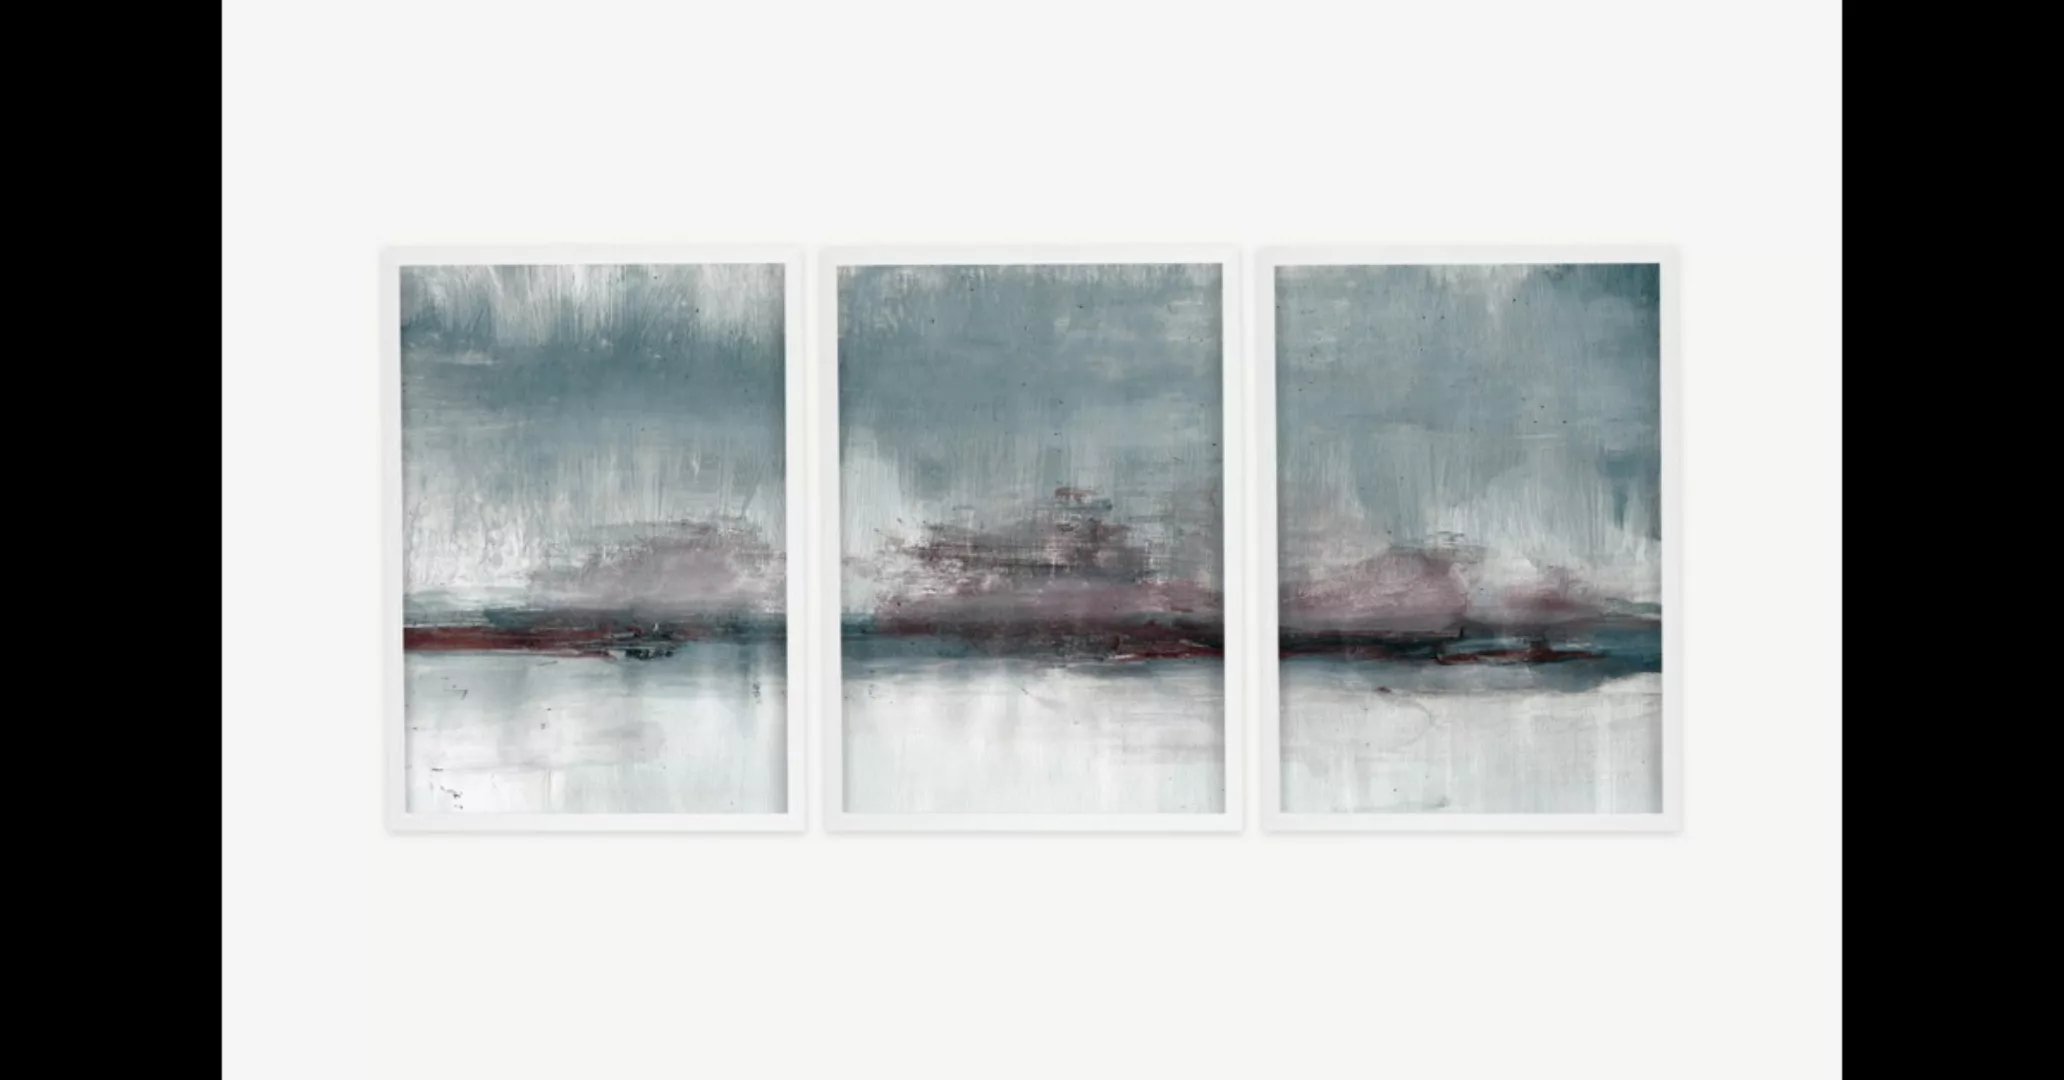 Dan Hobday 'Abstract Haze' 3 x gerahmte Kunstdrucke (A3) - MADE.com günstig online kaufen